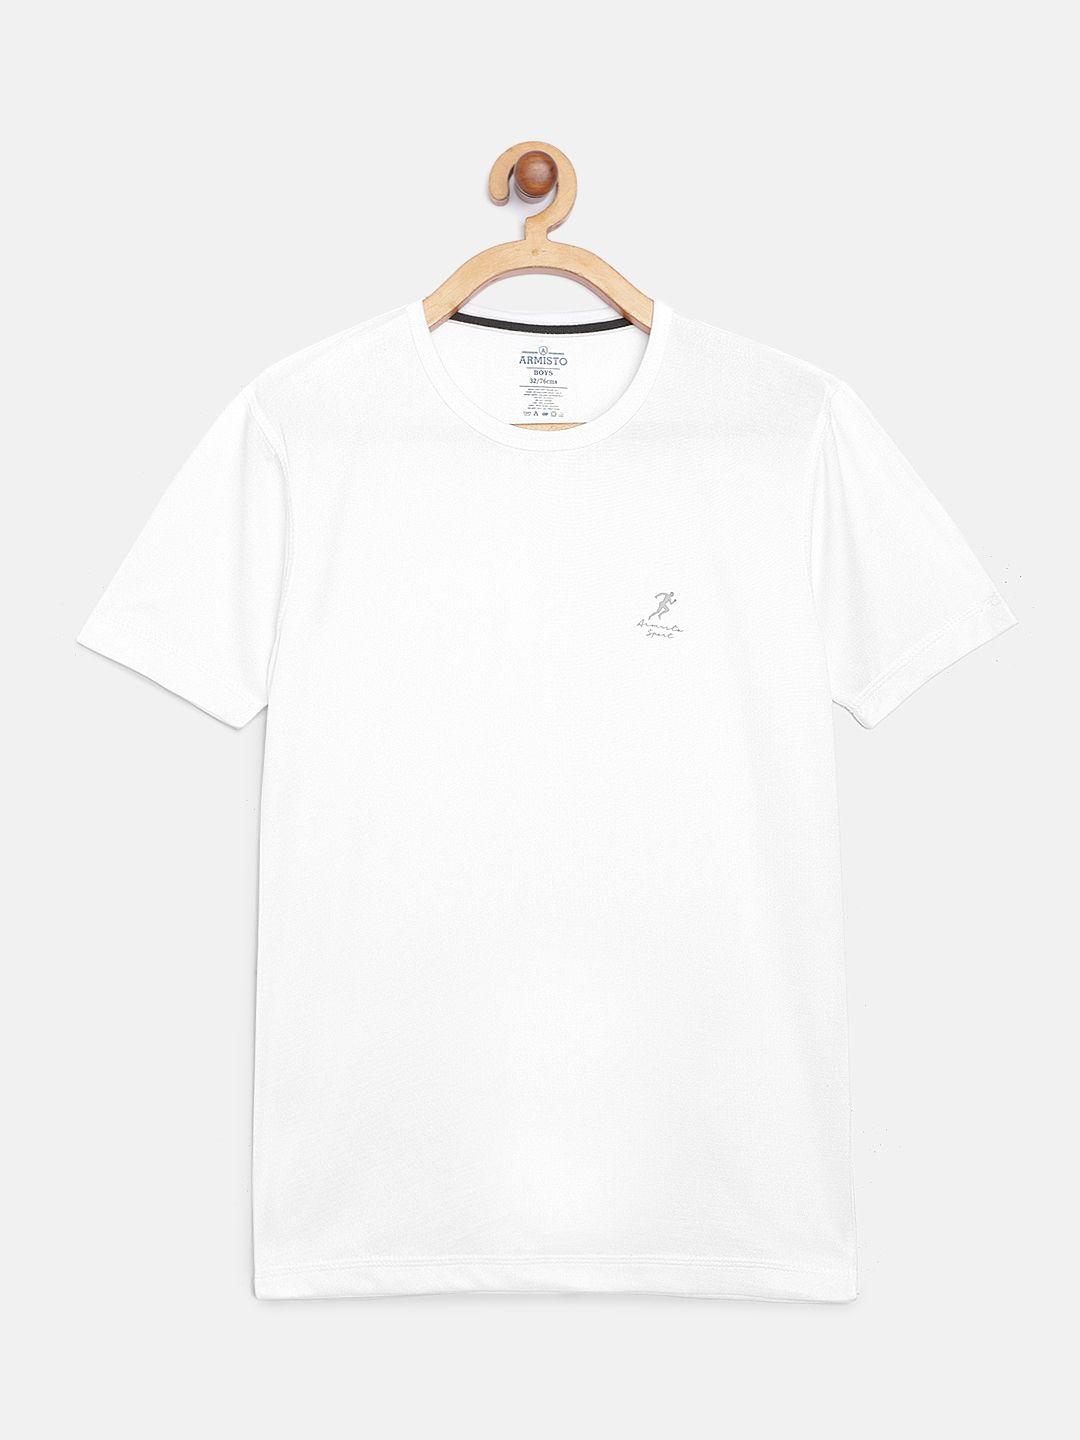 armisto boys white solid dri-fit cricket t-shirt